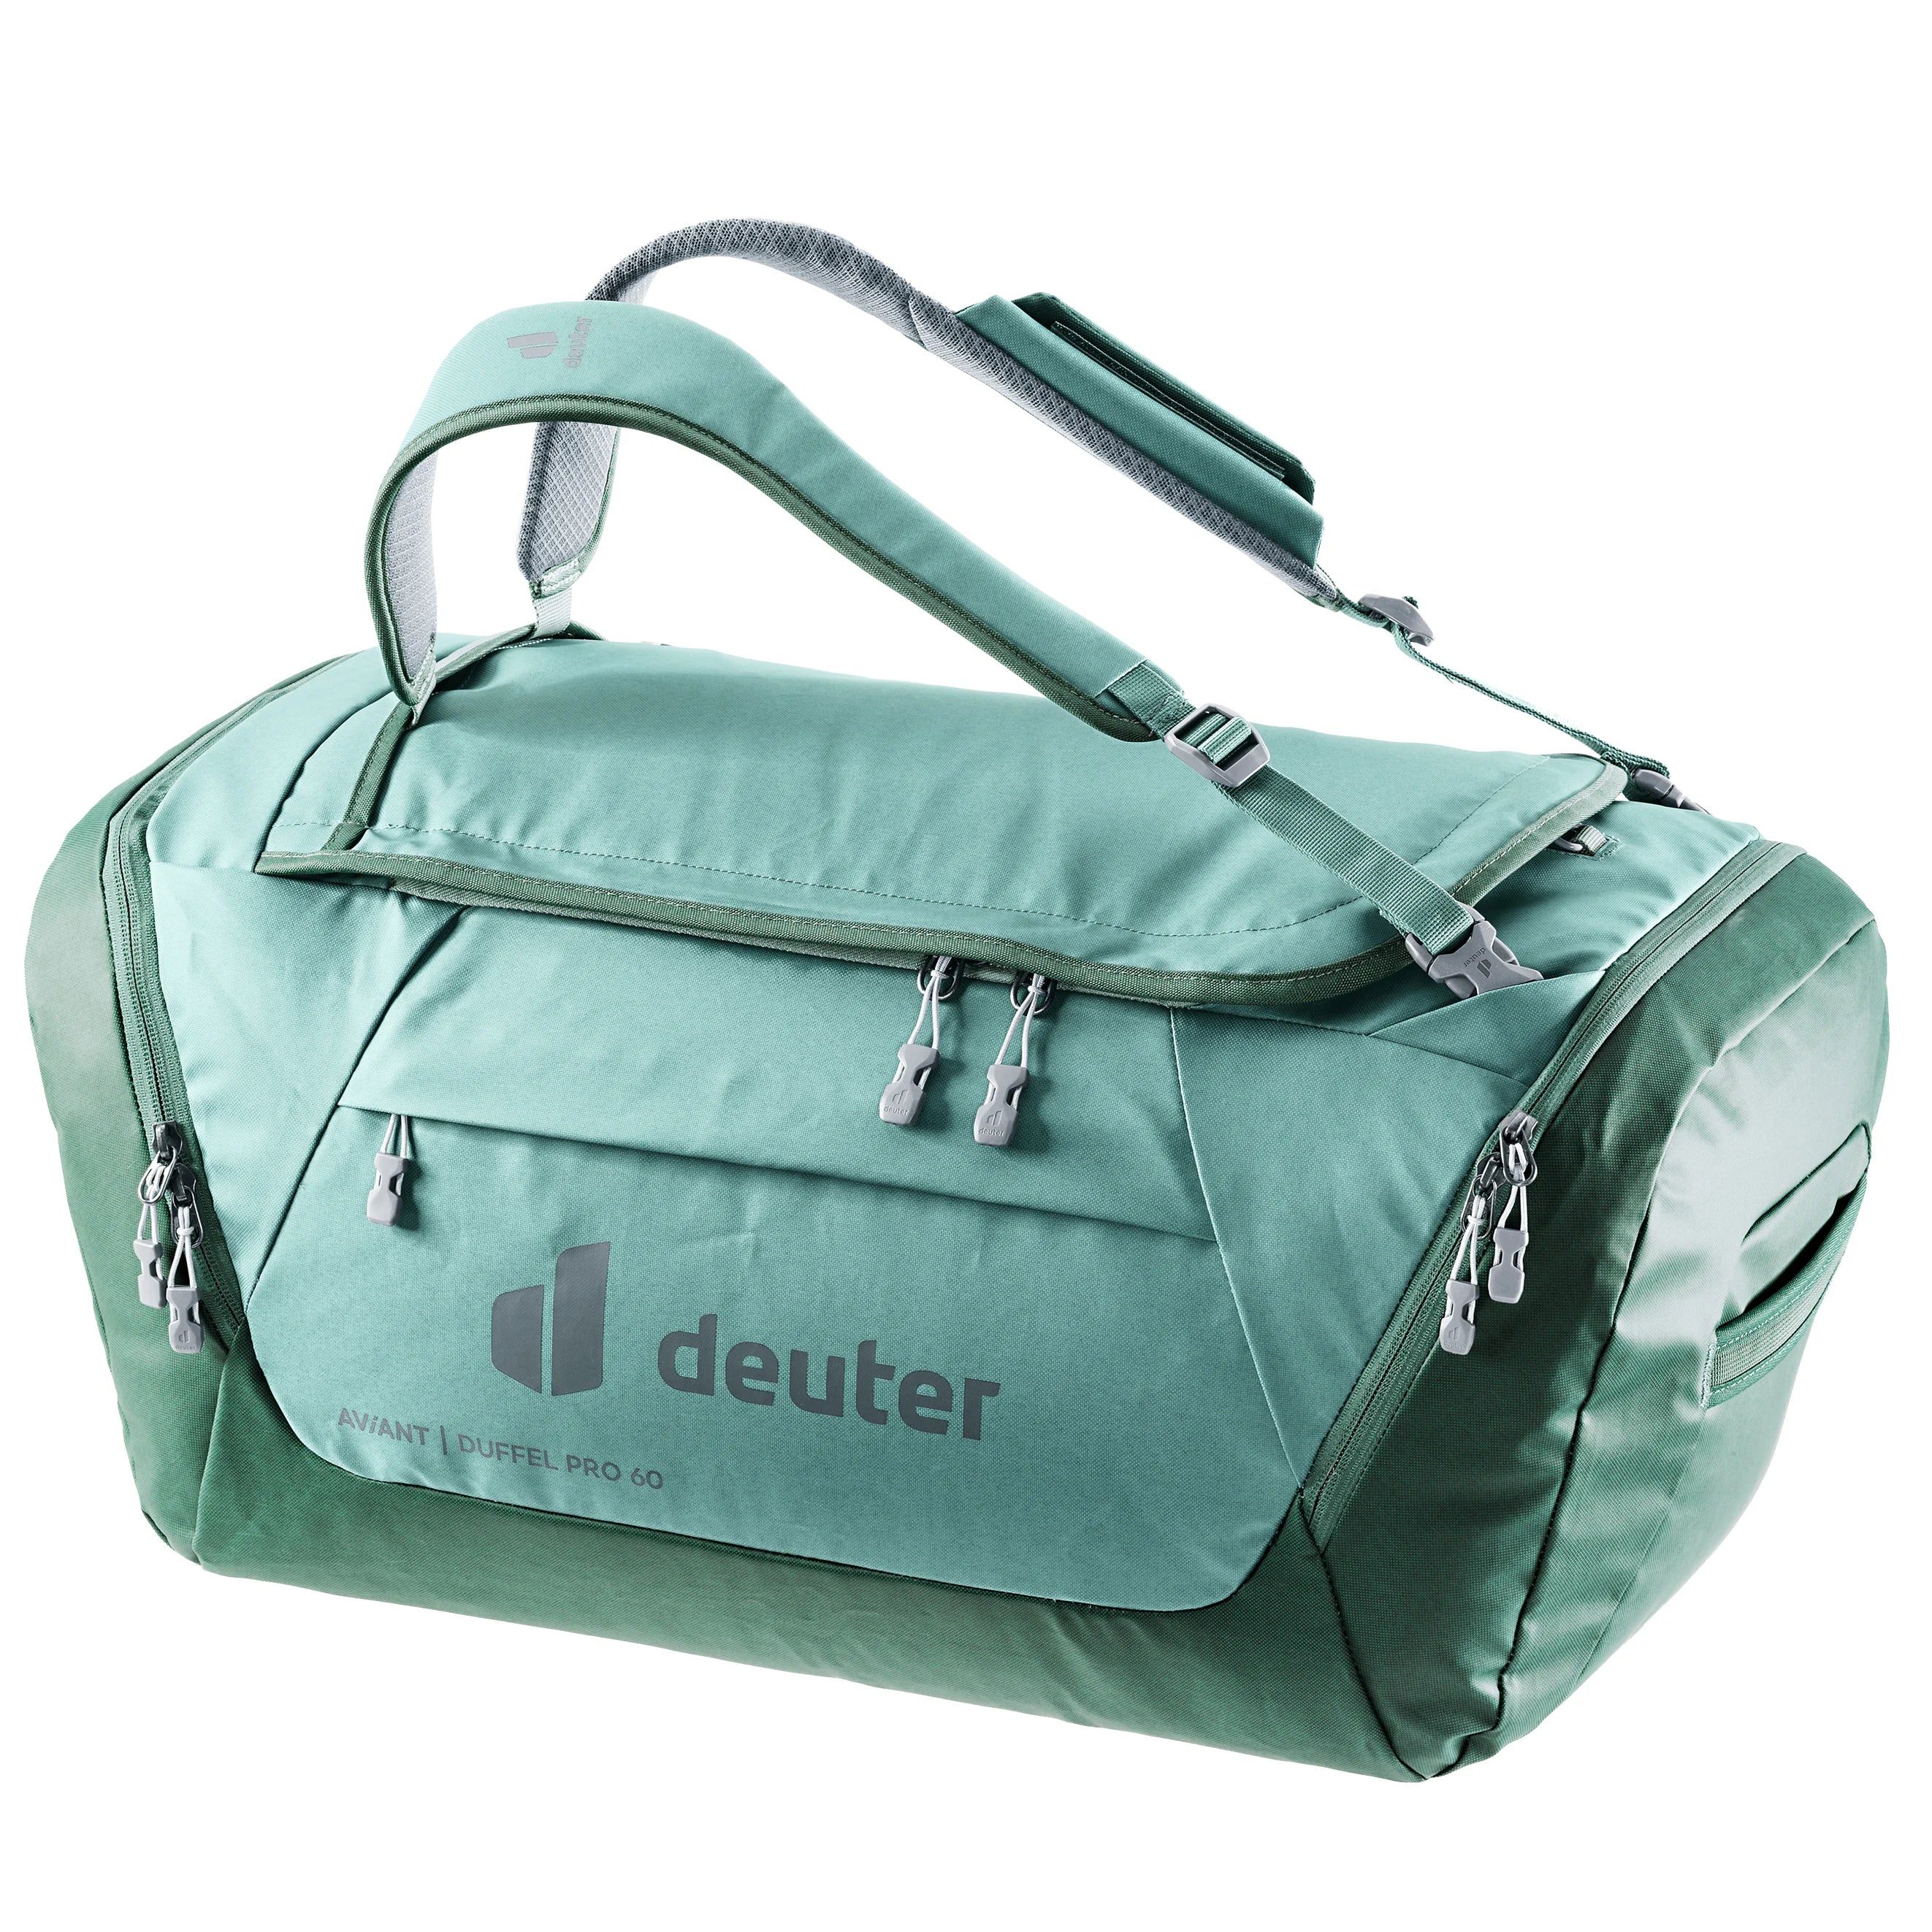 Deuter Travel Aviant Duffel Pro 60 travel bag 66 cm - jade-seagreen